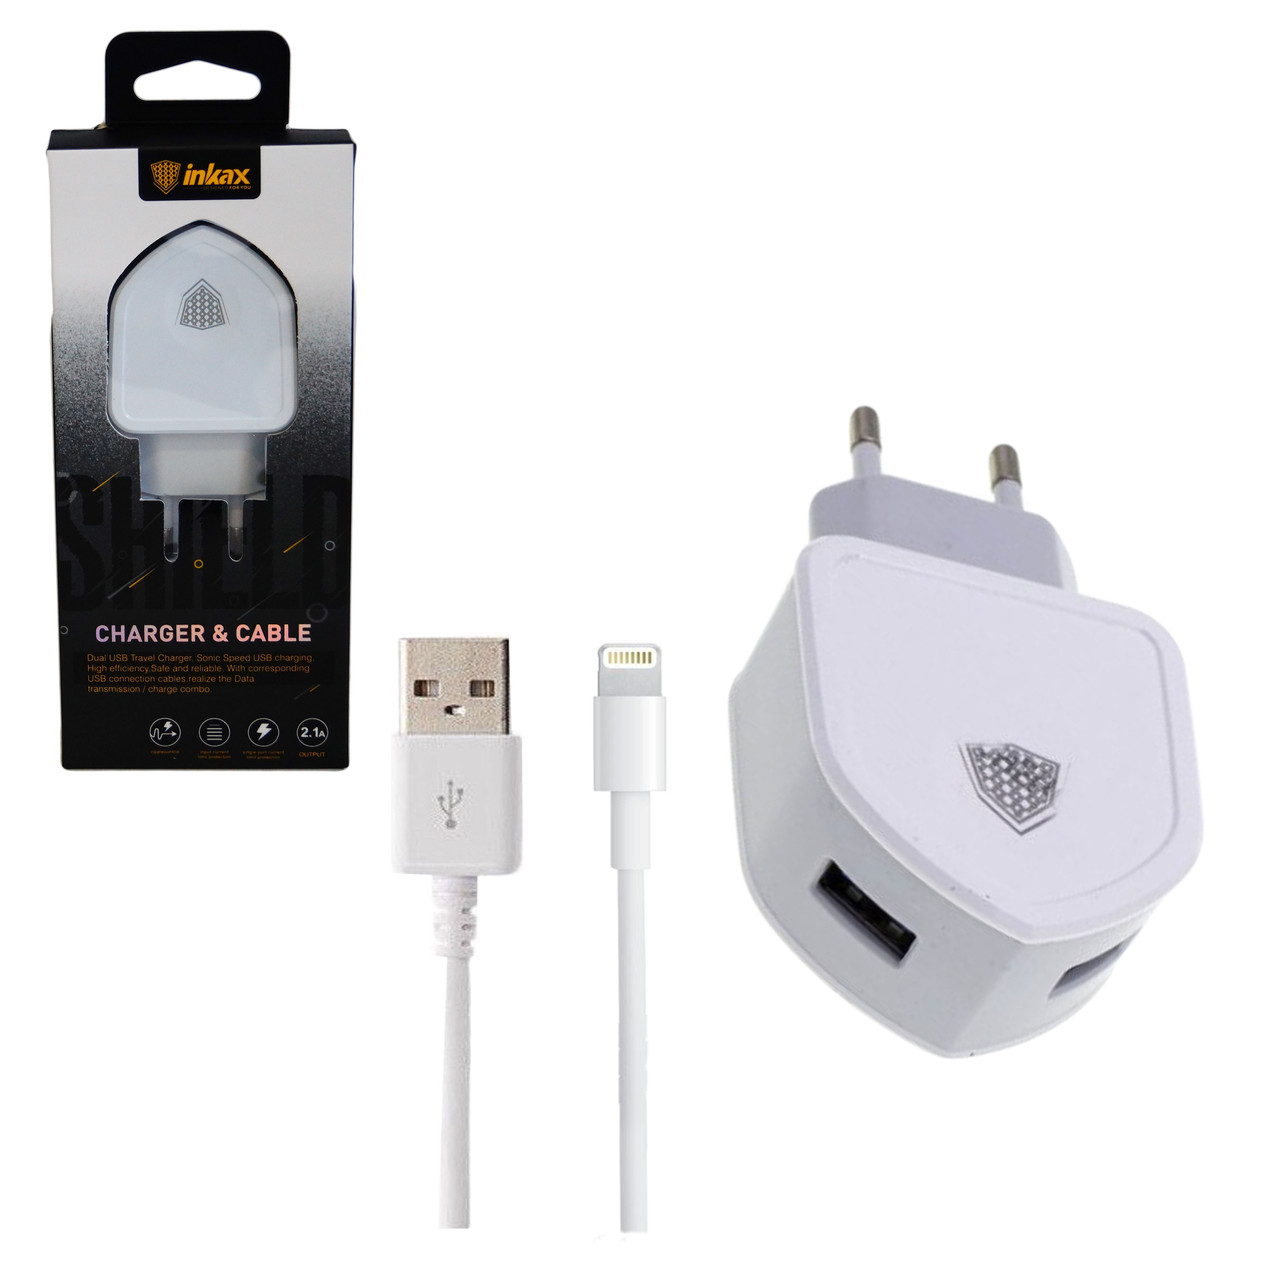 СЗУ "Inkax" 5V - 2100mA CD-18-IP + USB кабель Apple lightning 8 pin цвет белый.